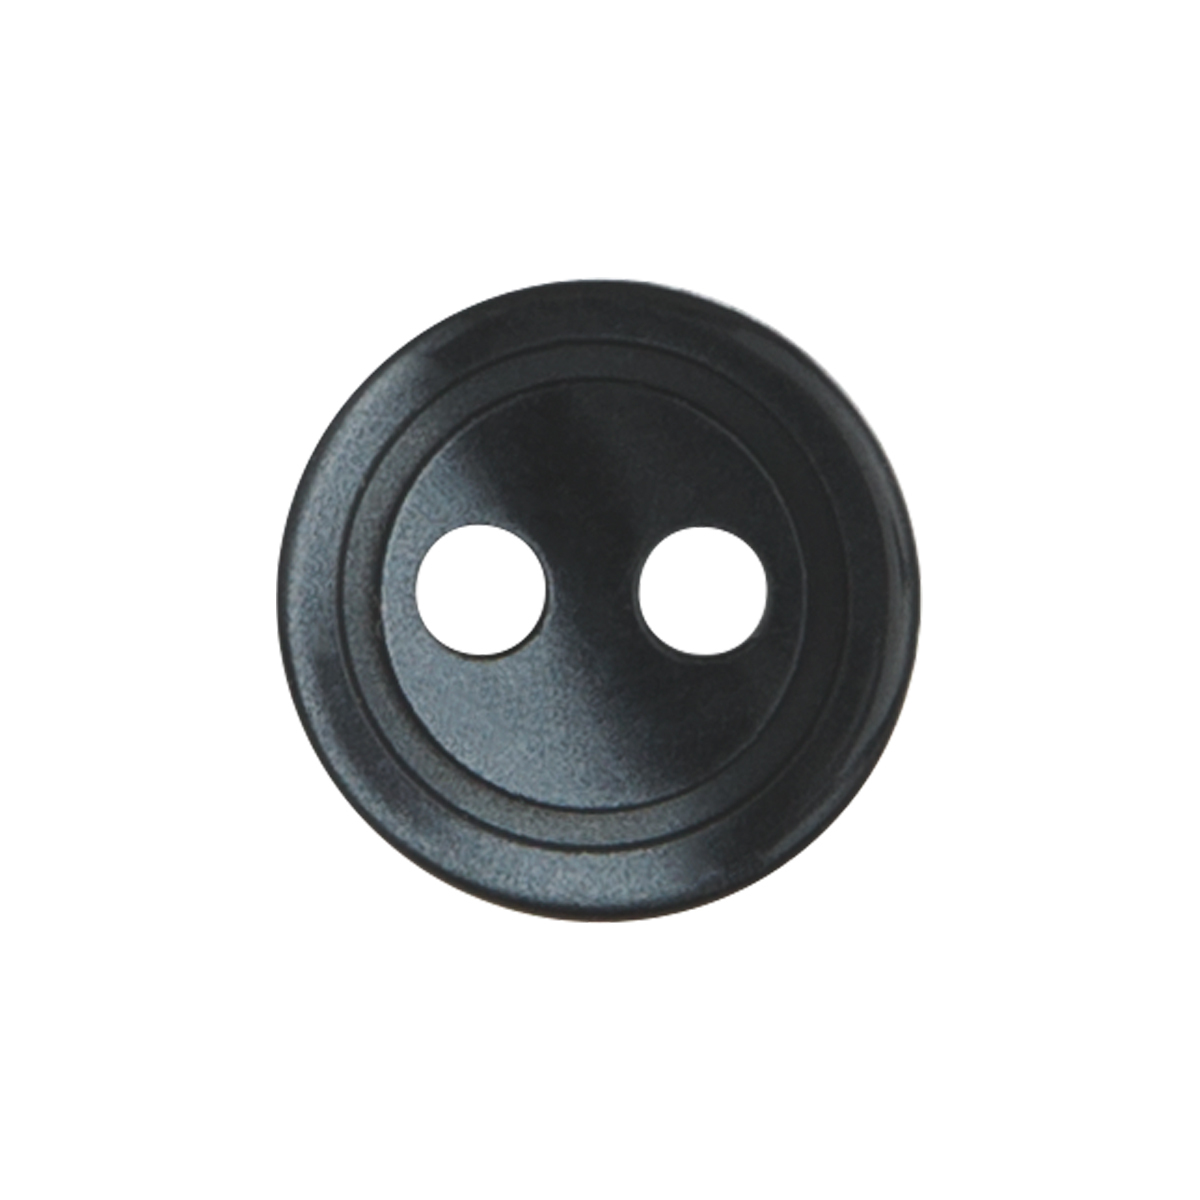 2 Hole Black Buttons 1/2 inch (15 pcs)